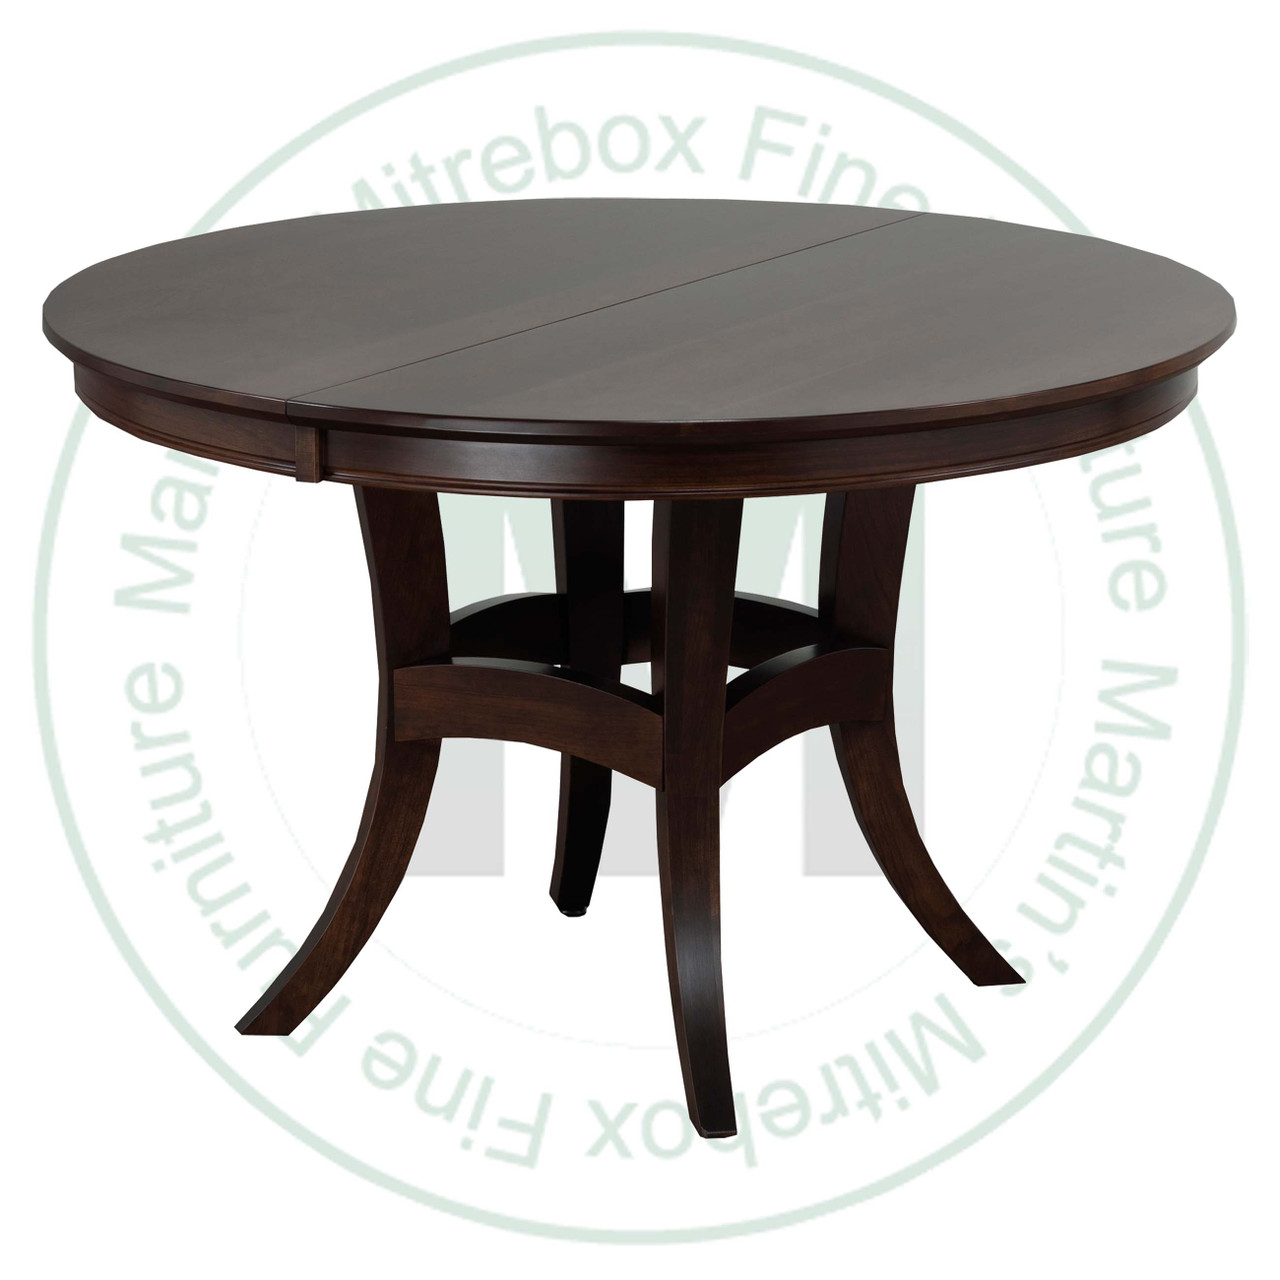 Oak Beijing Single Pedestal Table 42''D x 48''W x 30''H With Solid Top